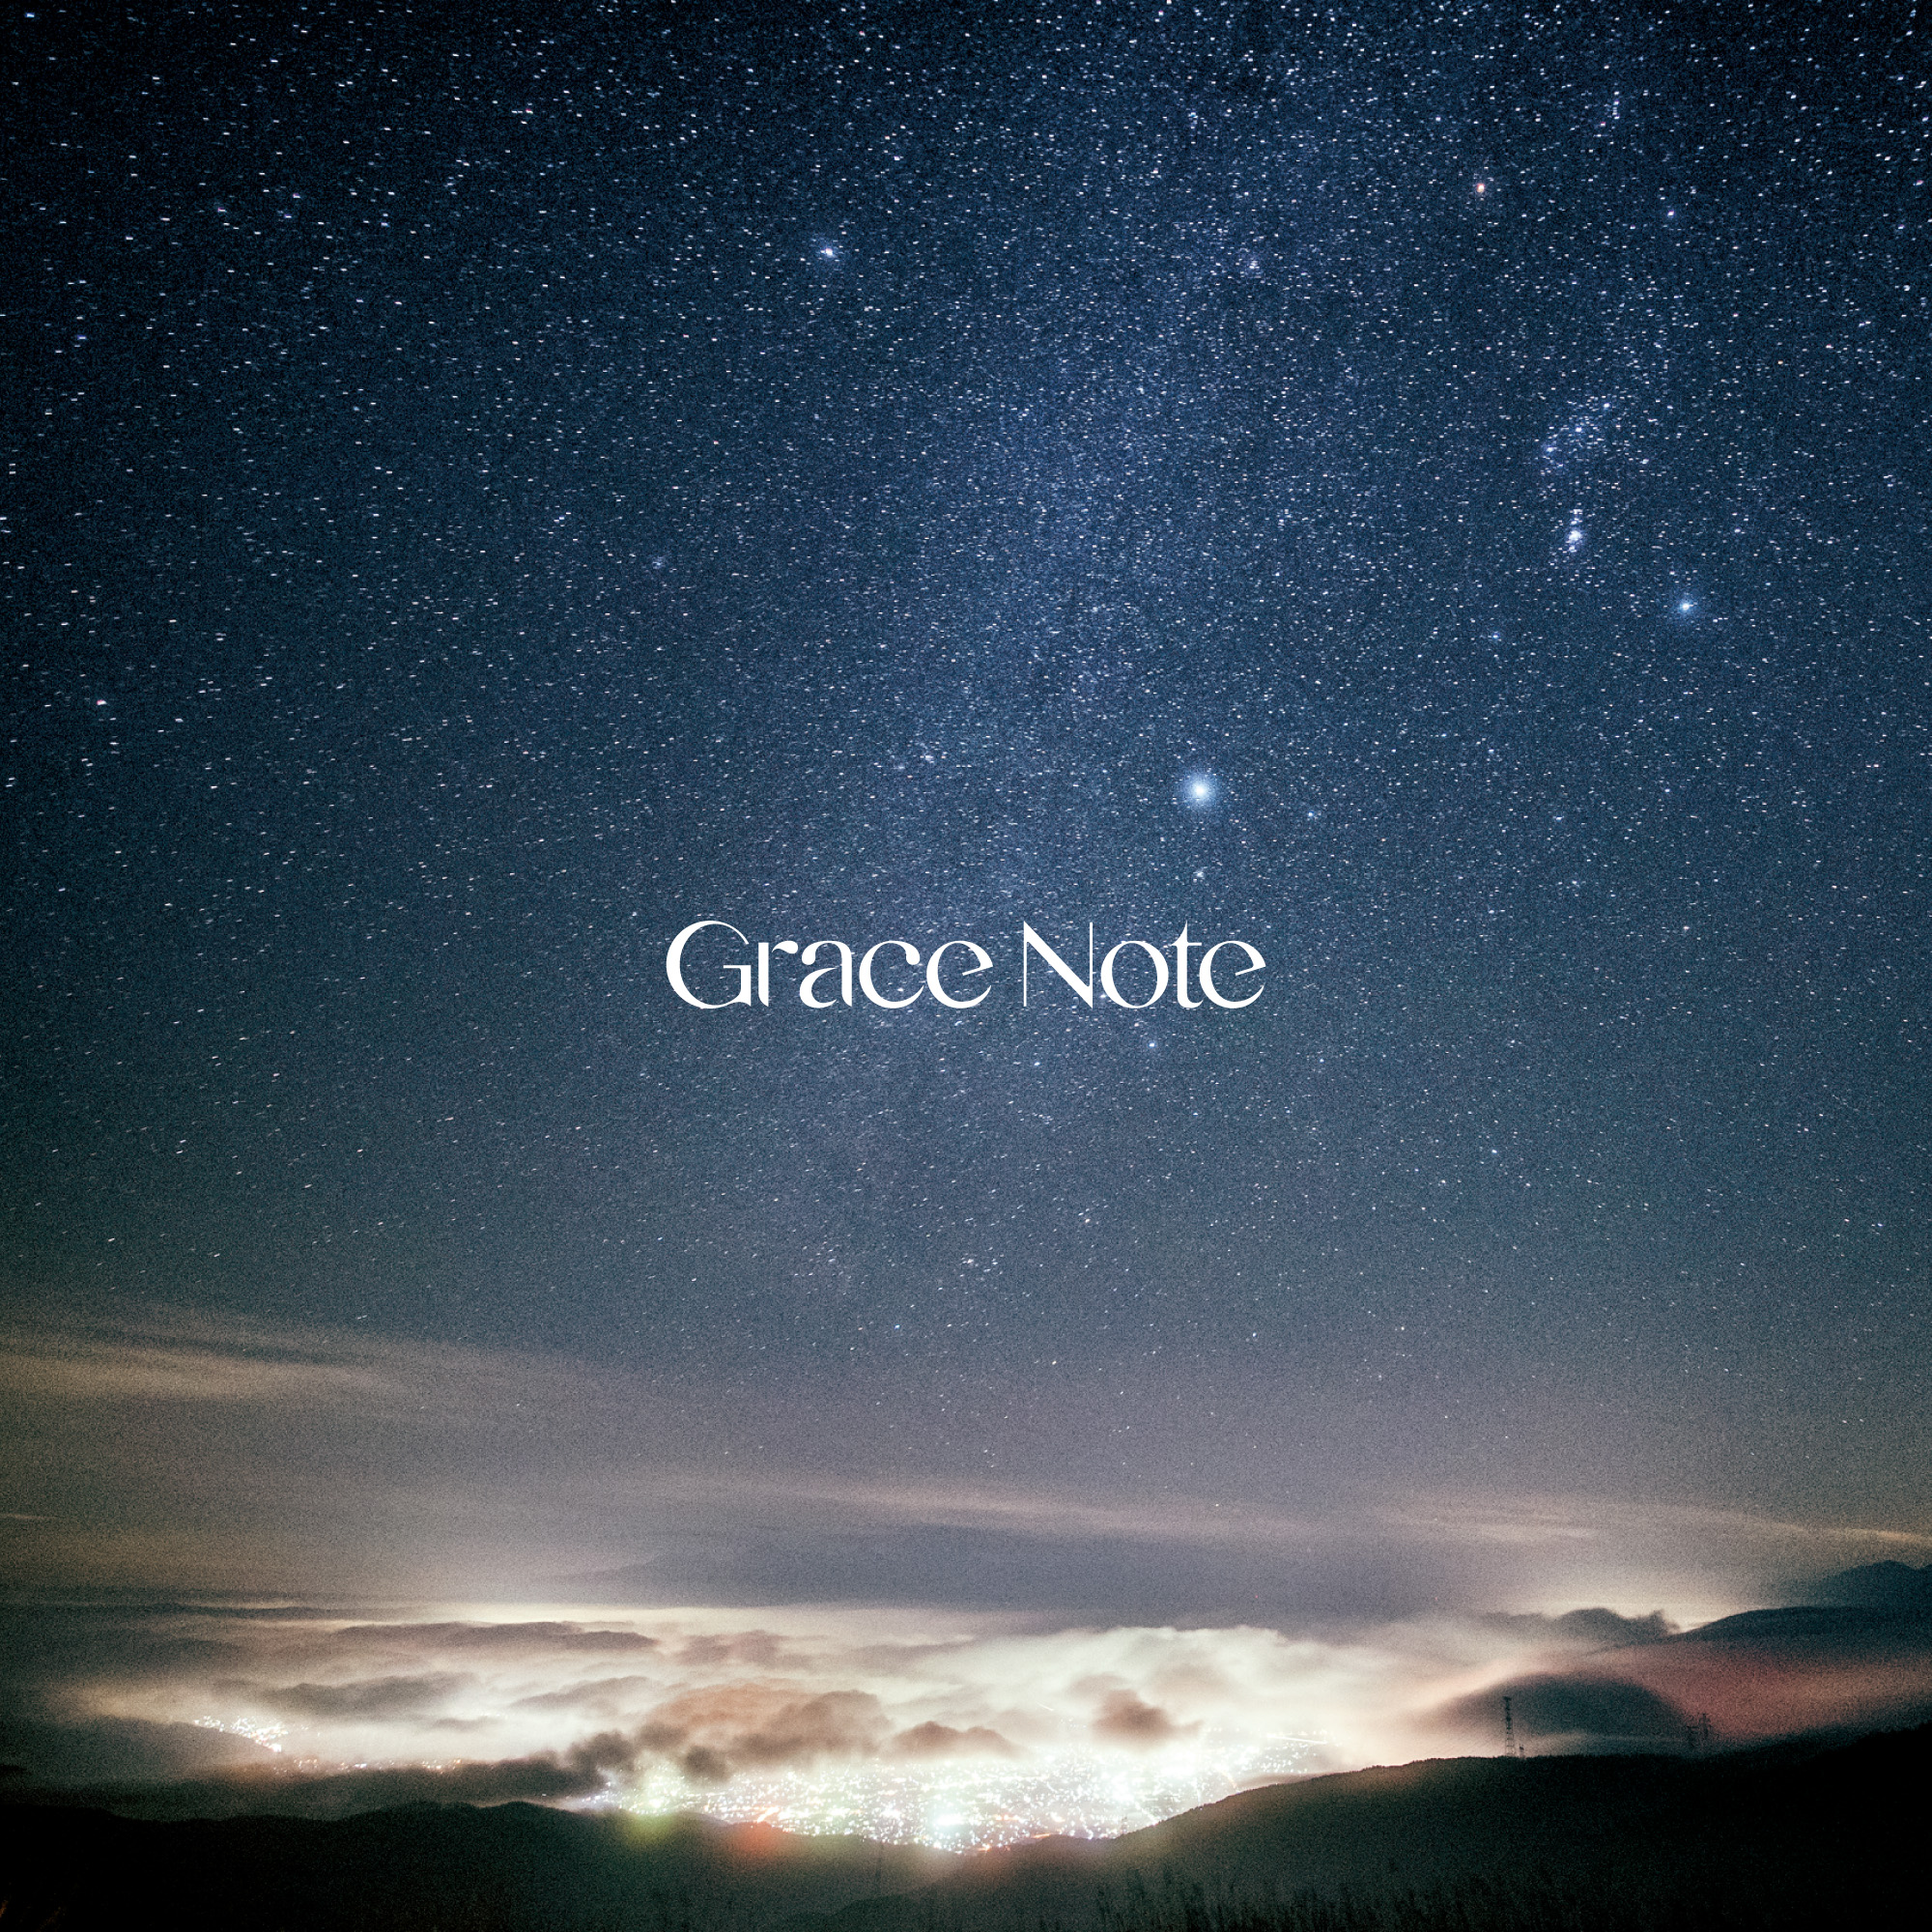 Bray me、10/16発売の Grace Note より「GRACE」のMV公開!